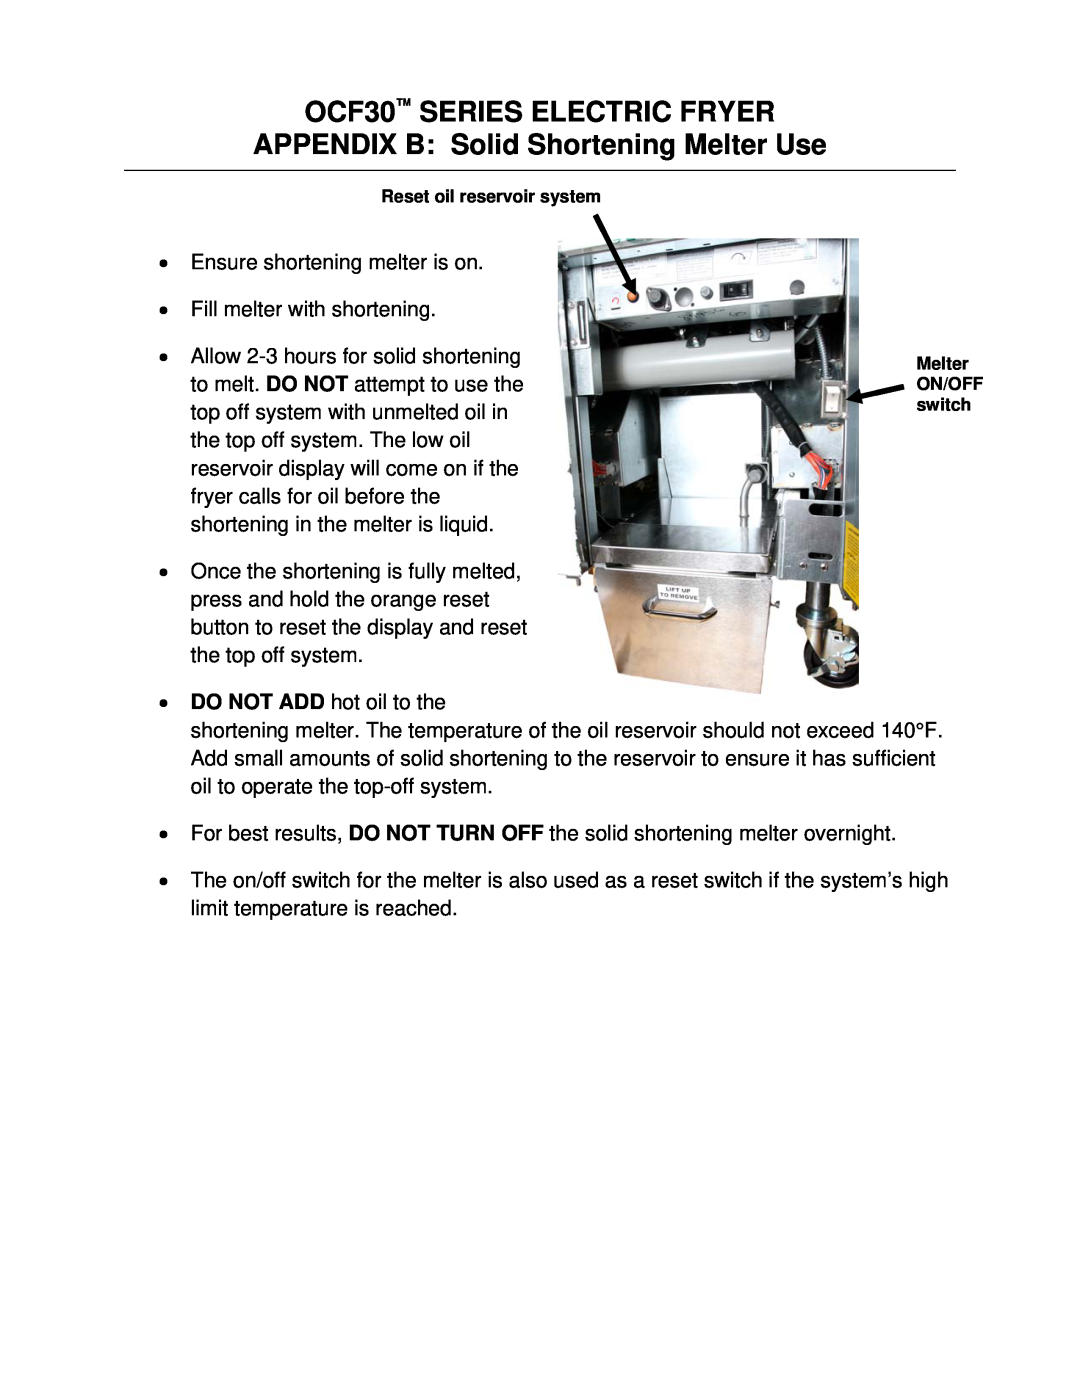 Frymaster operation manual APPENDIX B Solid Shortening Melter Use, OCF30 SERIES ELECTRIC FRYER 